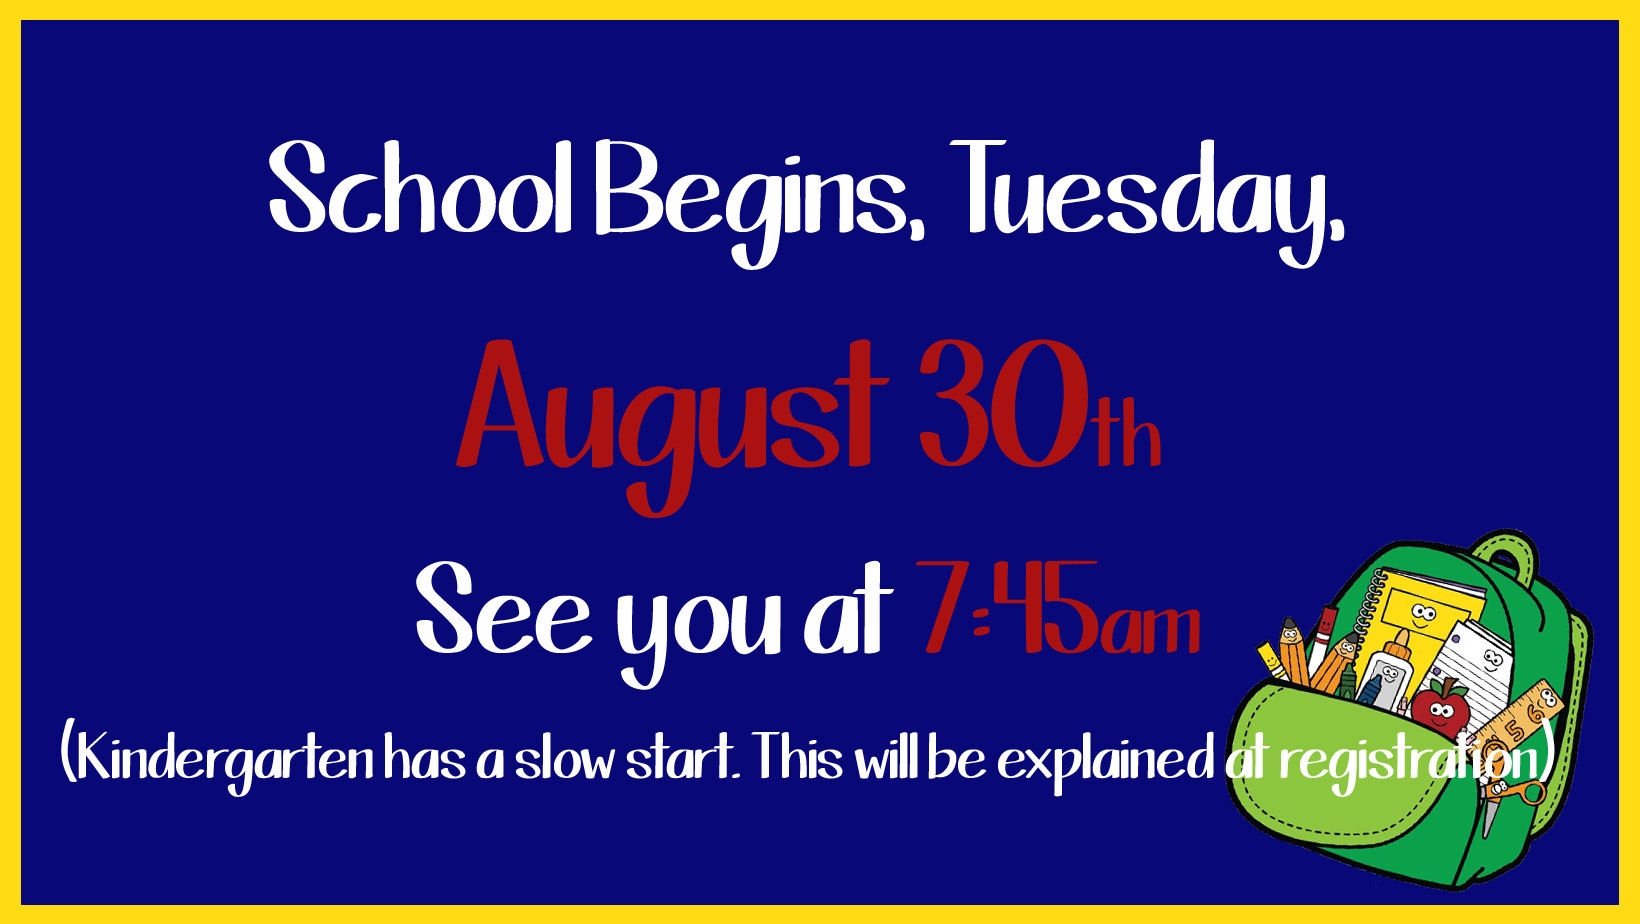 School begins tuesday, august 30